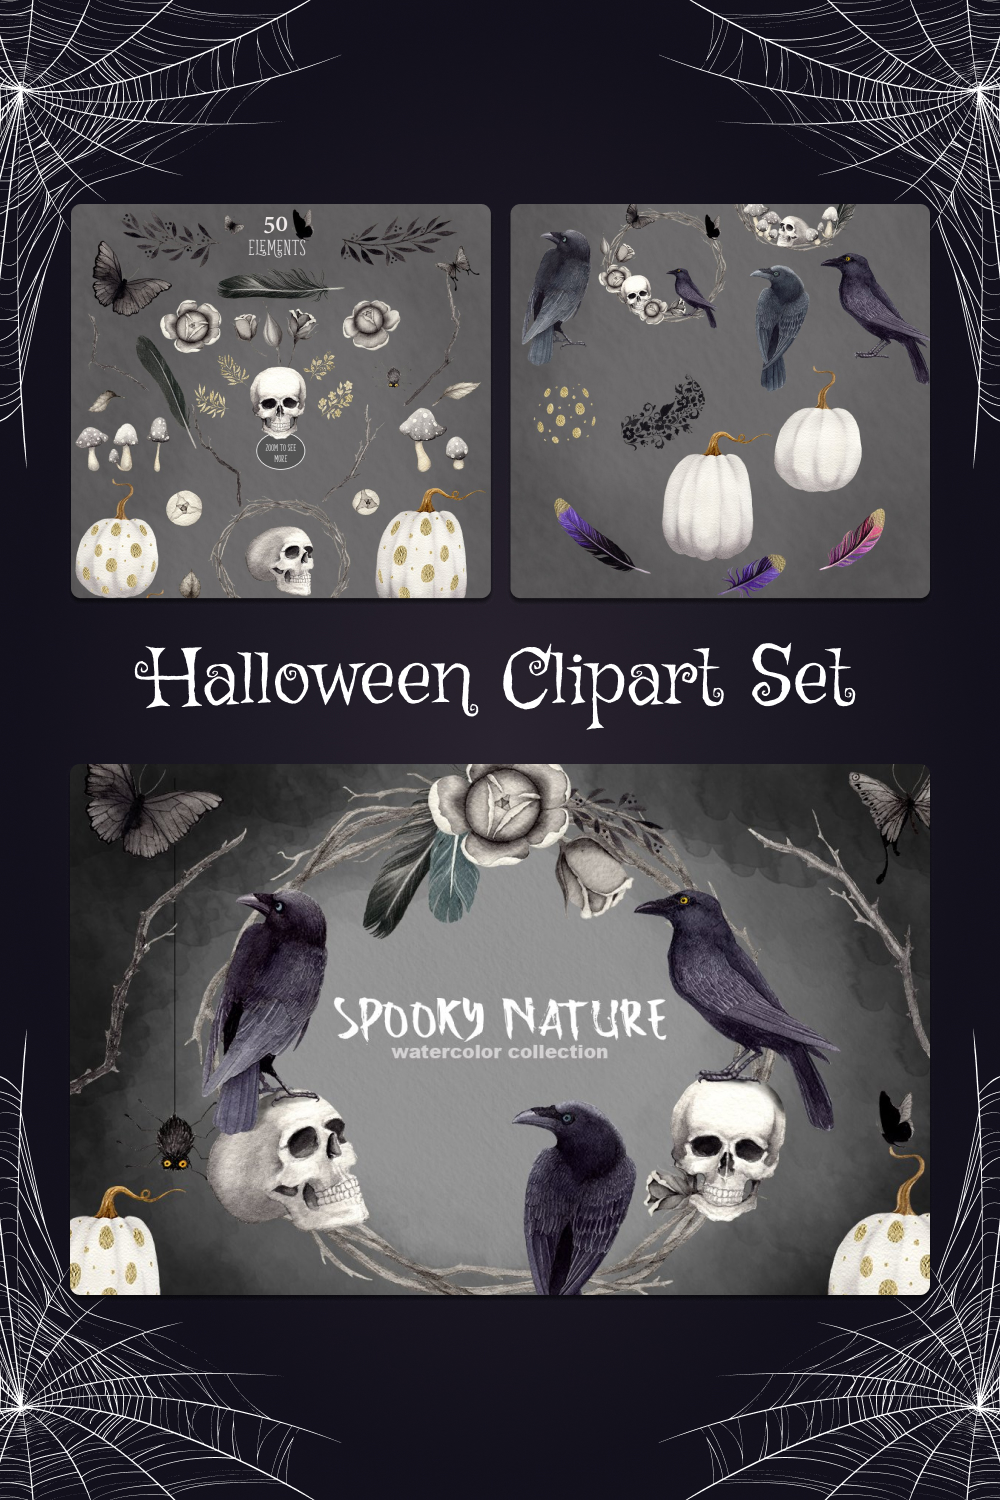 Halloween clipart set spooky nature of pinterest.